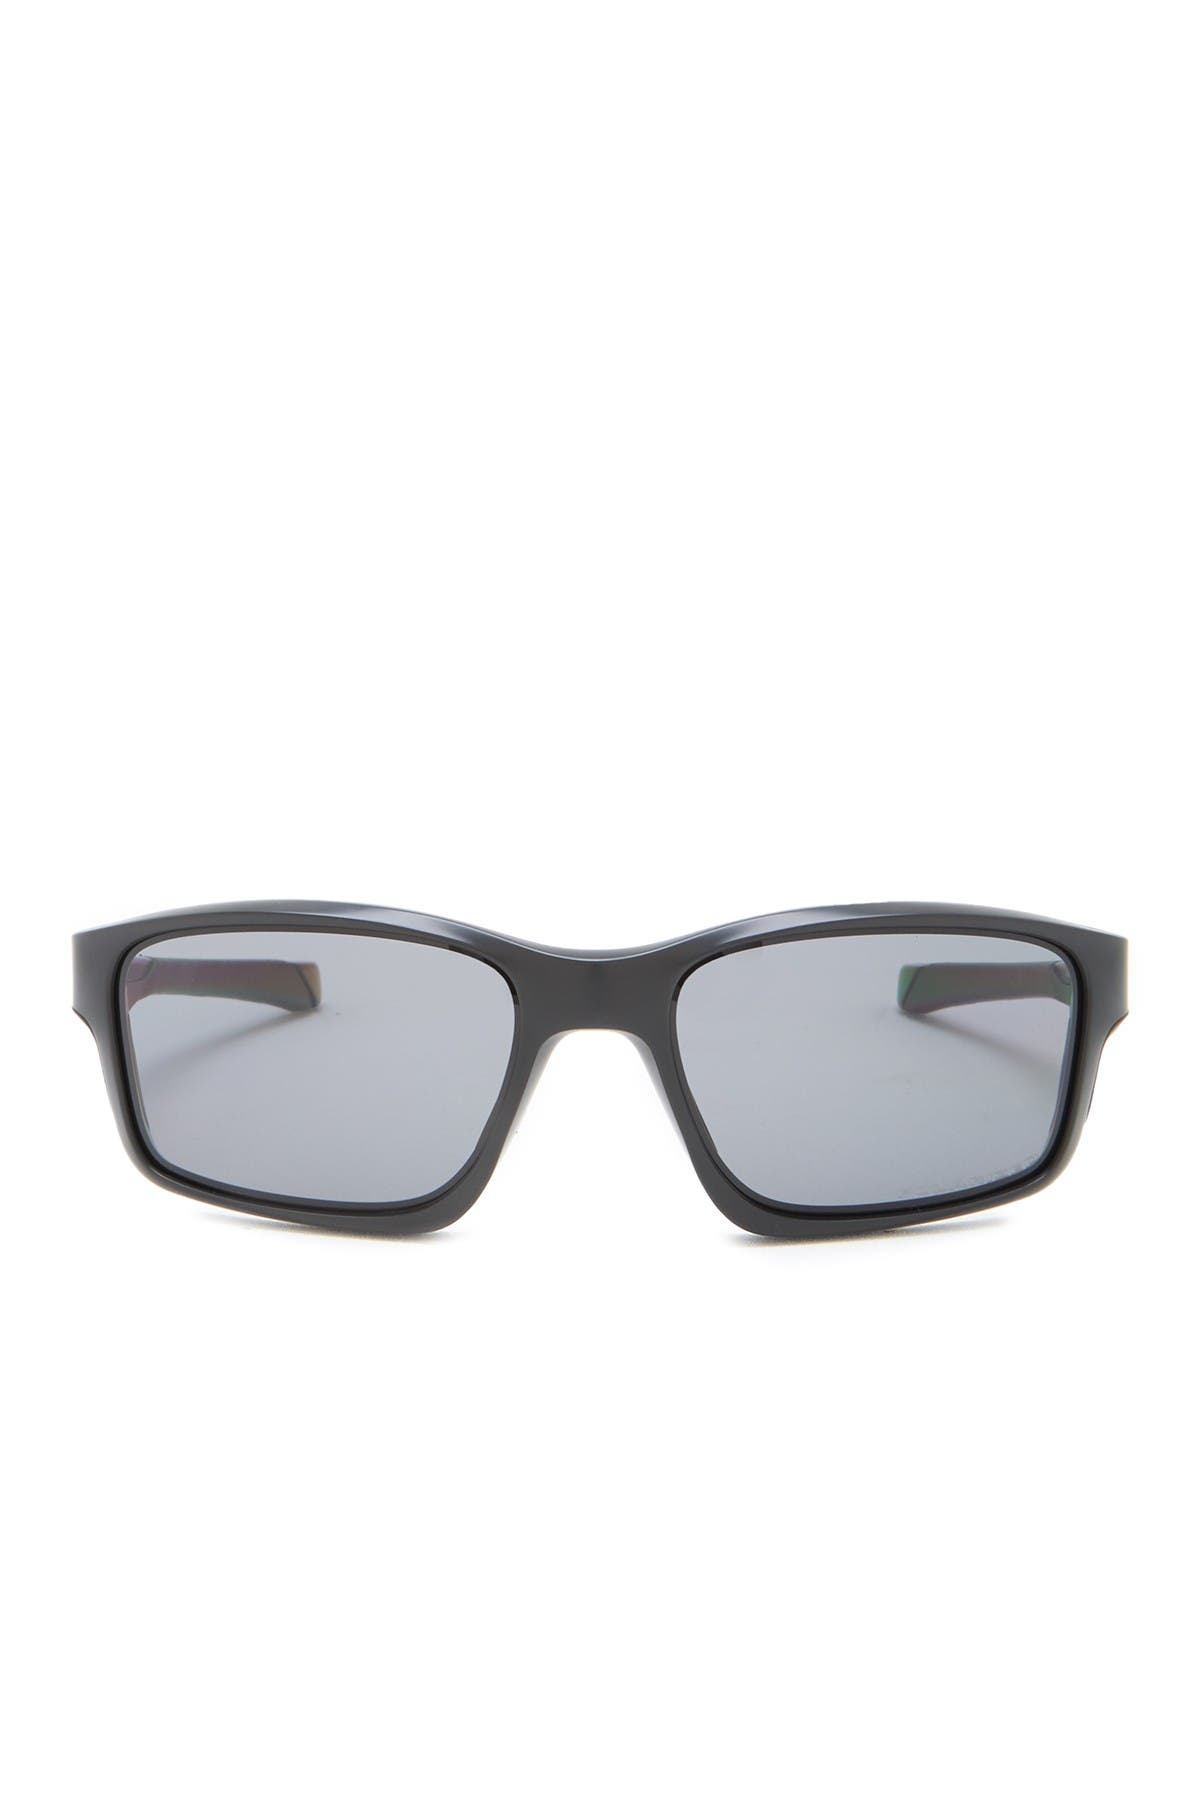 oakley chainlink 57mm sunglasses